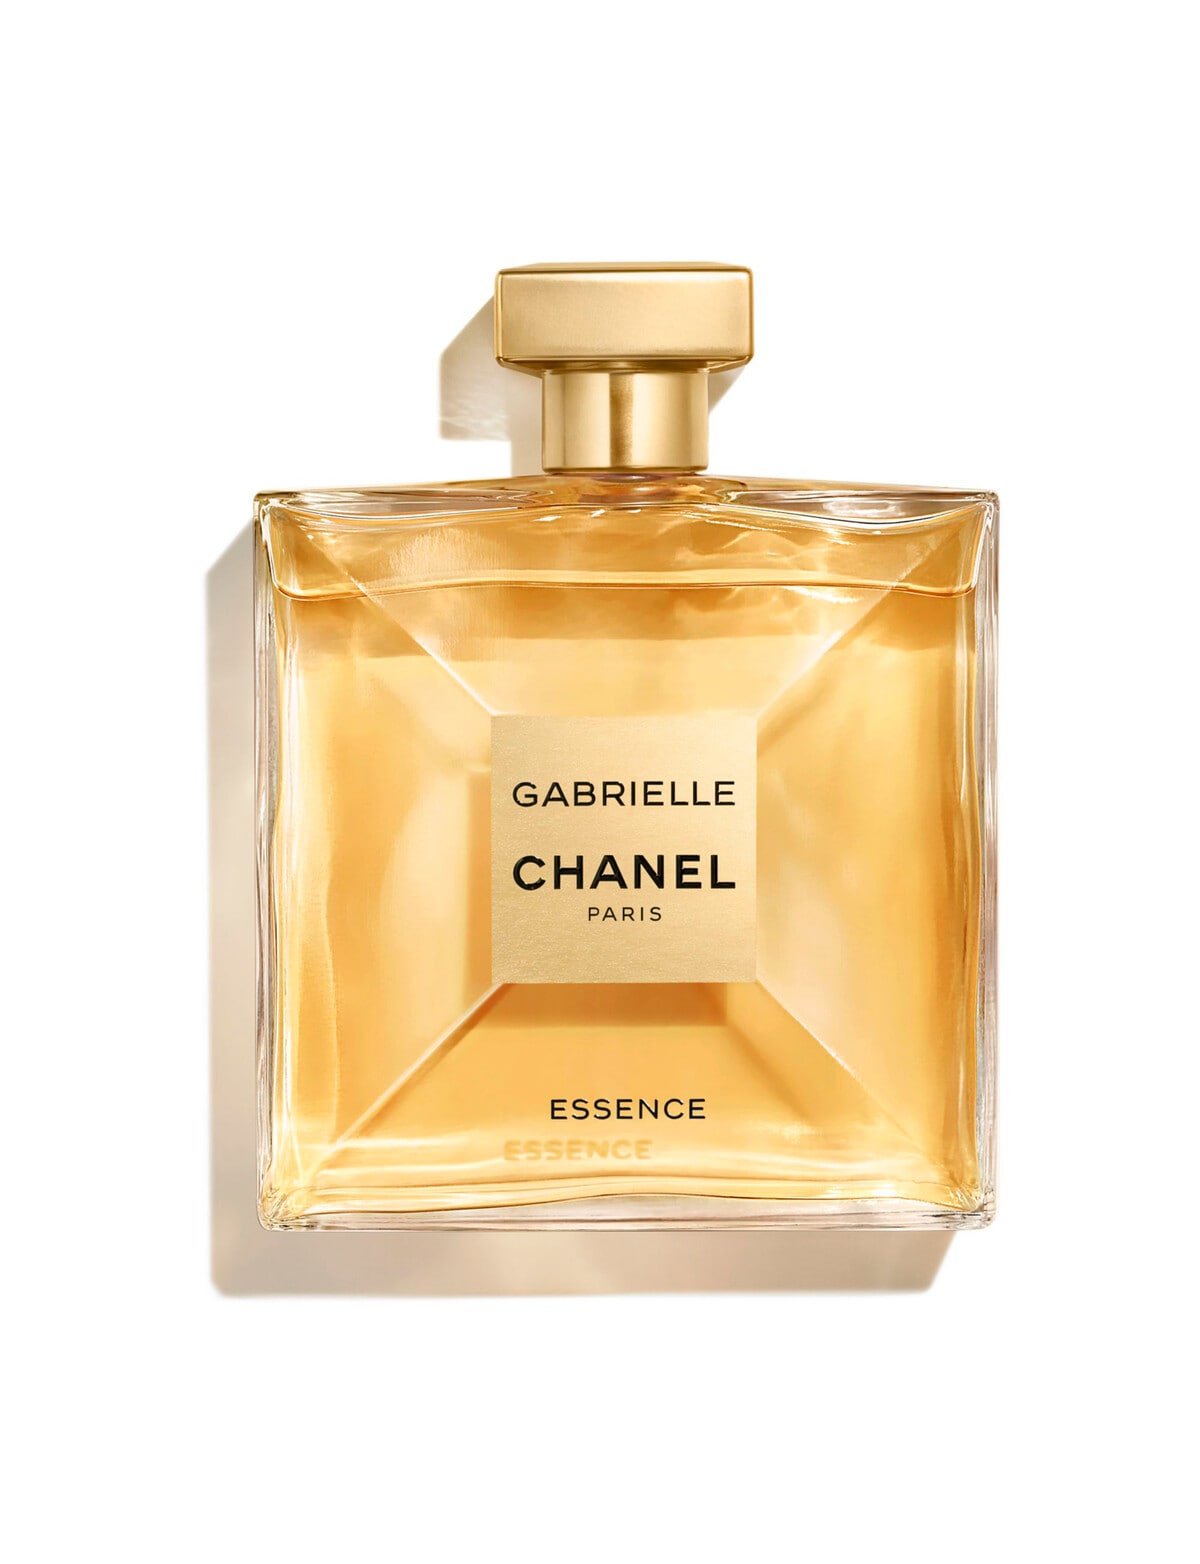 CHANEL GABRIELLE CHANEL Essence Eau de Parfum Spray - GABRIELLE CHANEL